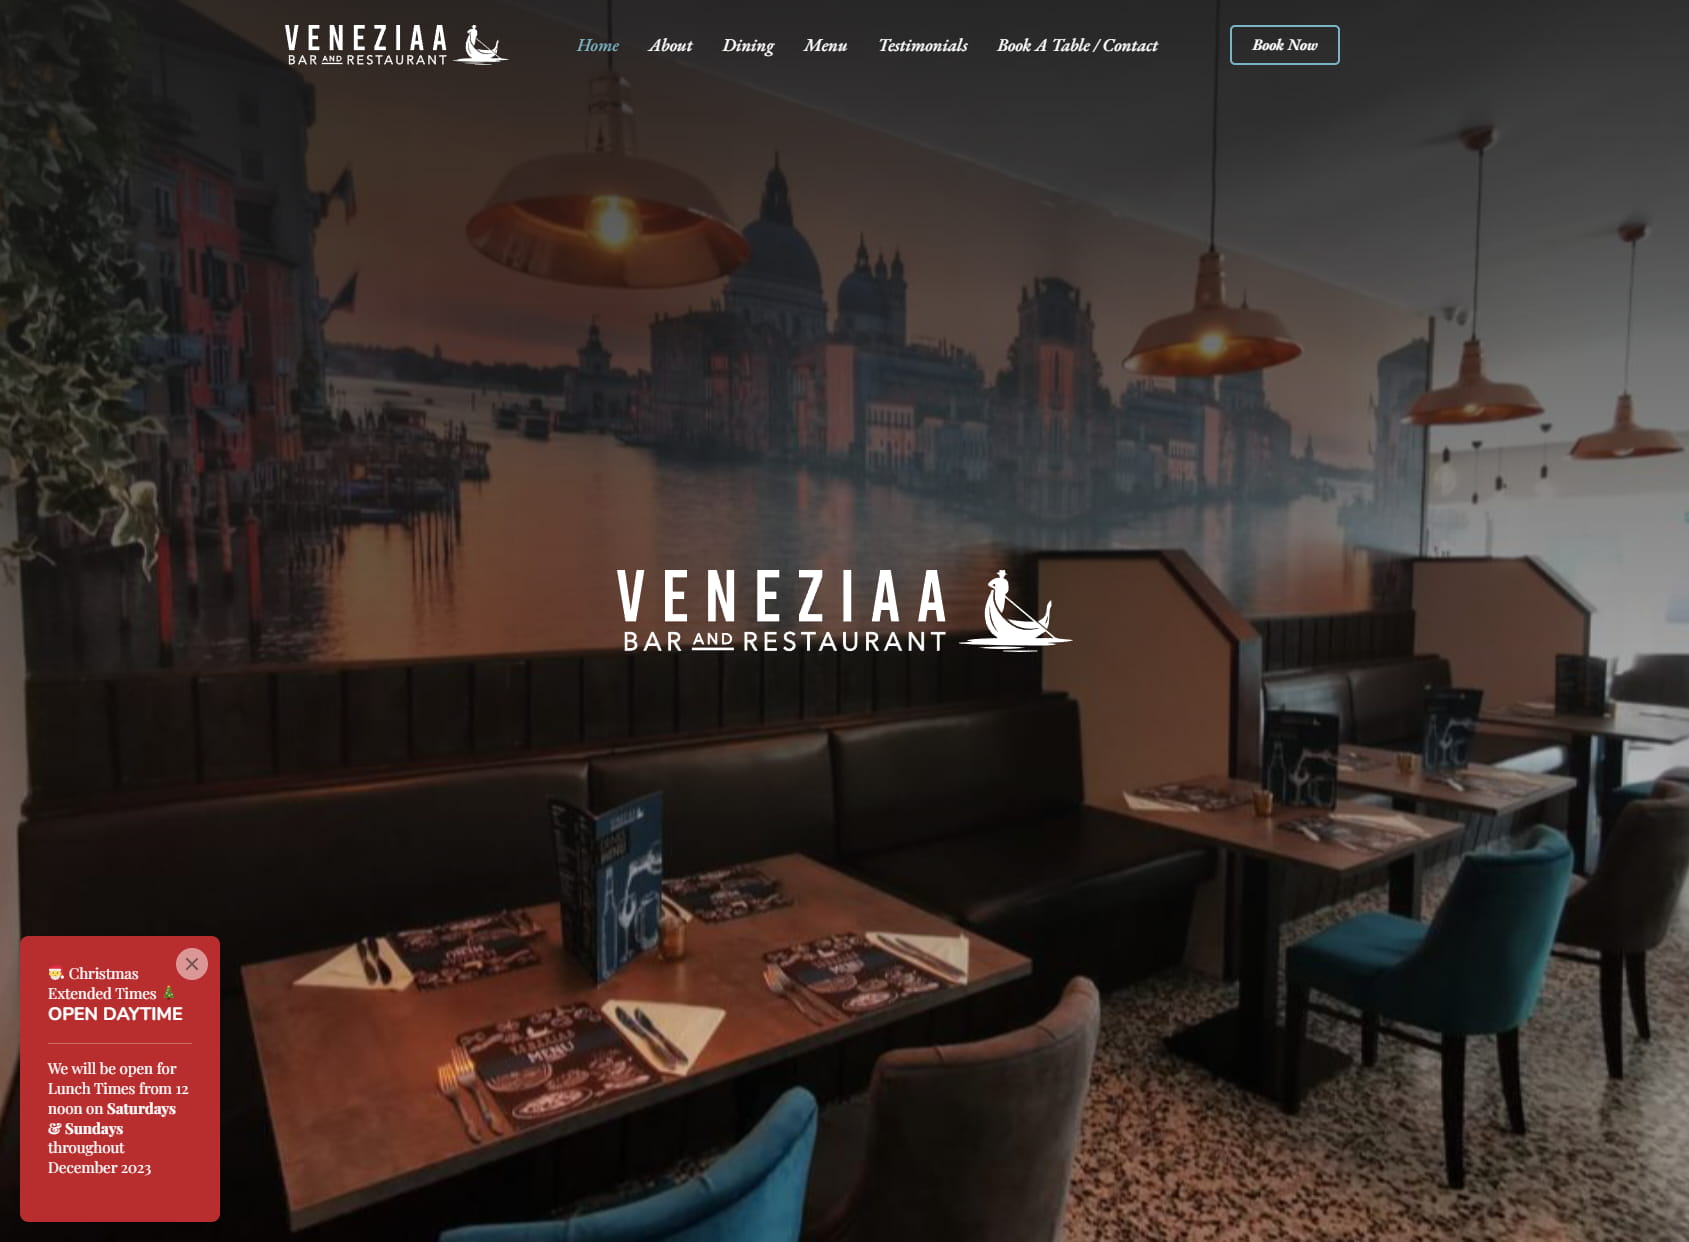 Veneziaa Bar and Restaurant